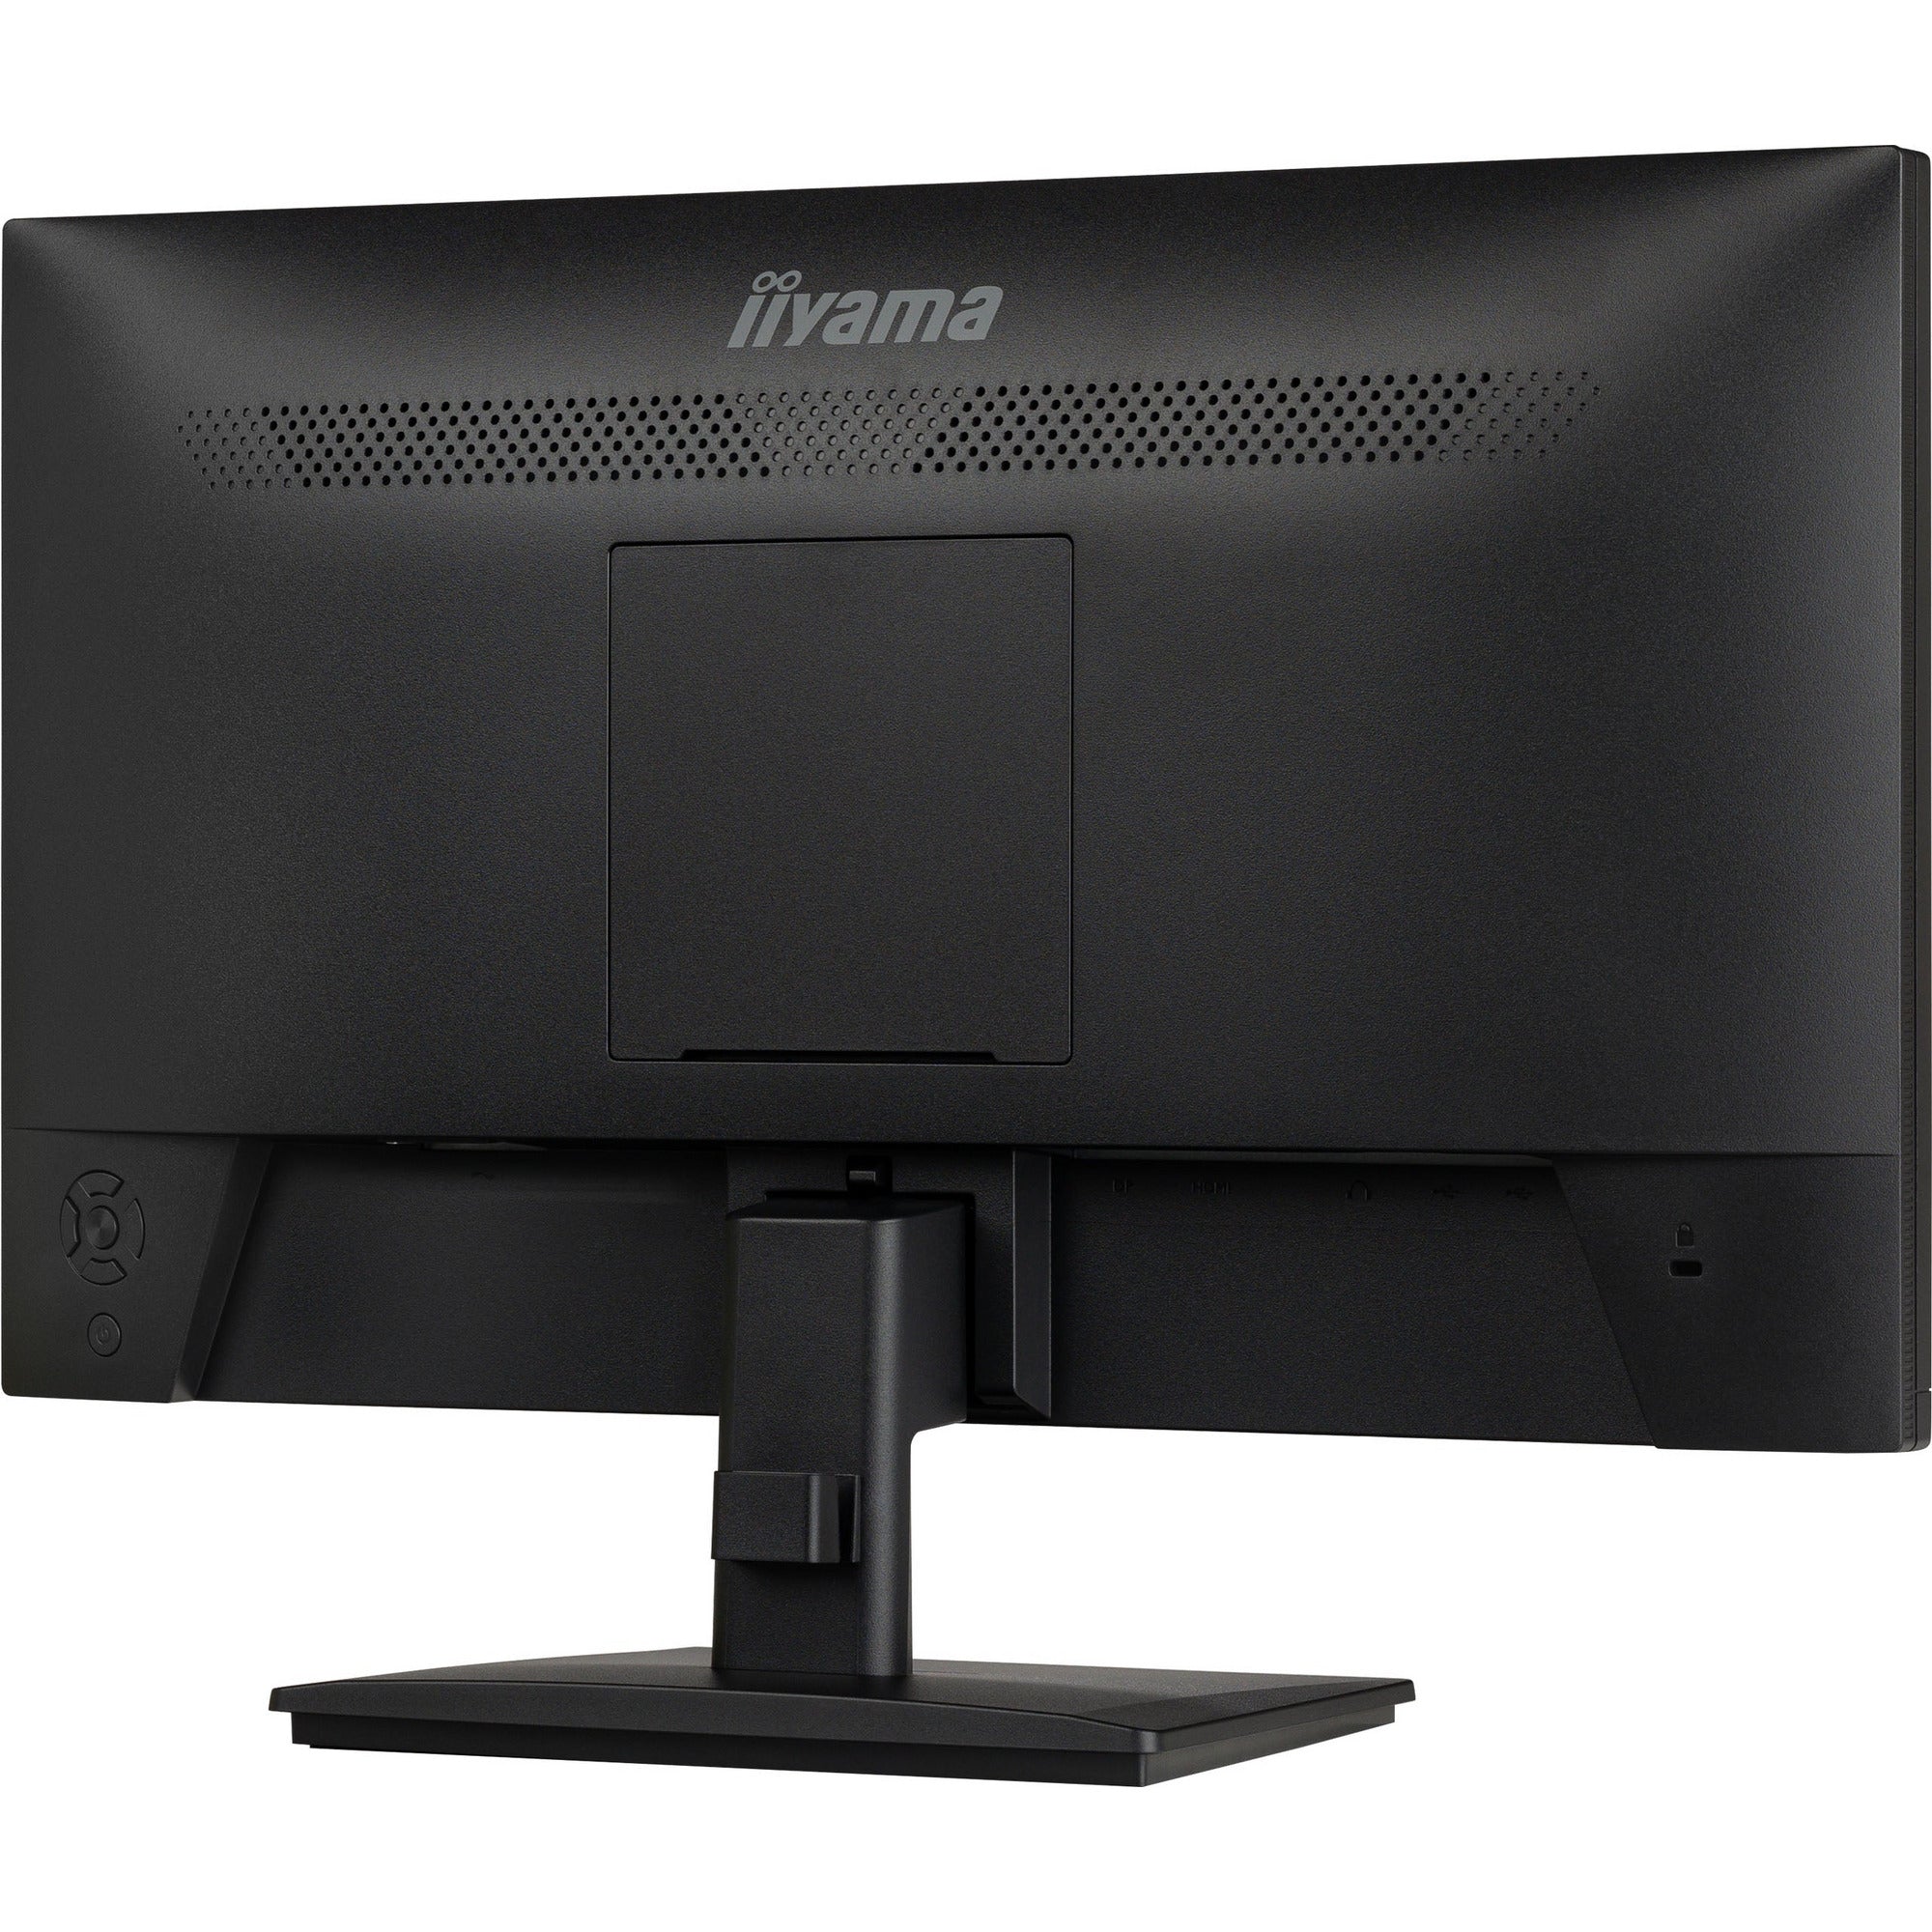 iiyama ProLite X2283HSU-B1 21.5" VA Monitor with Fixed Stand